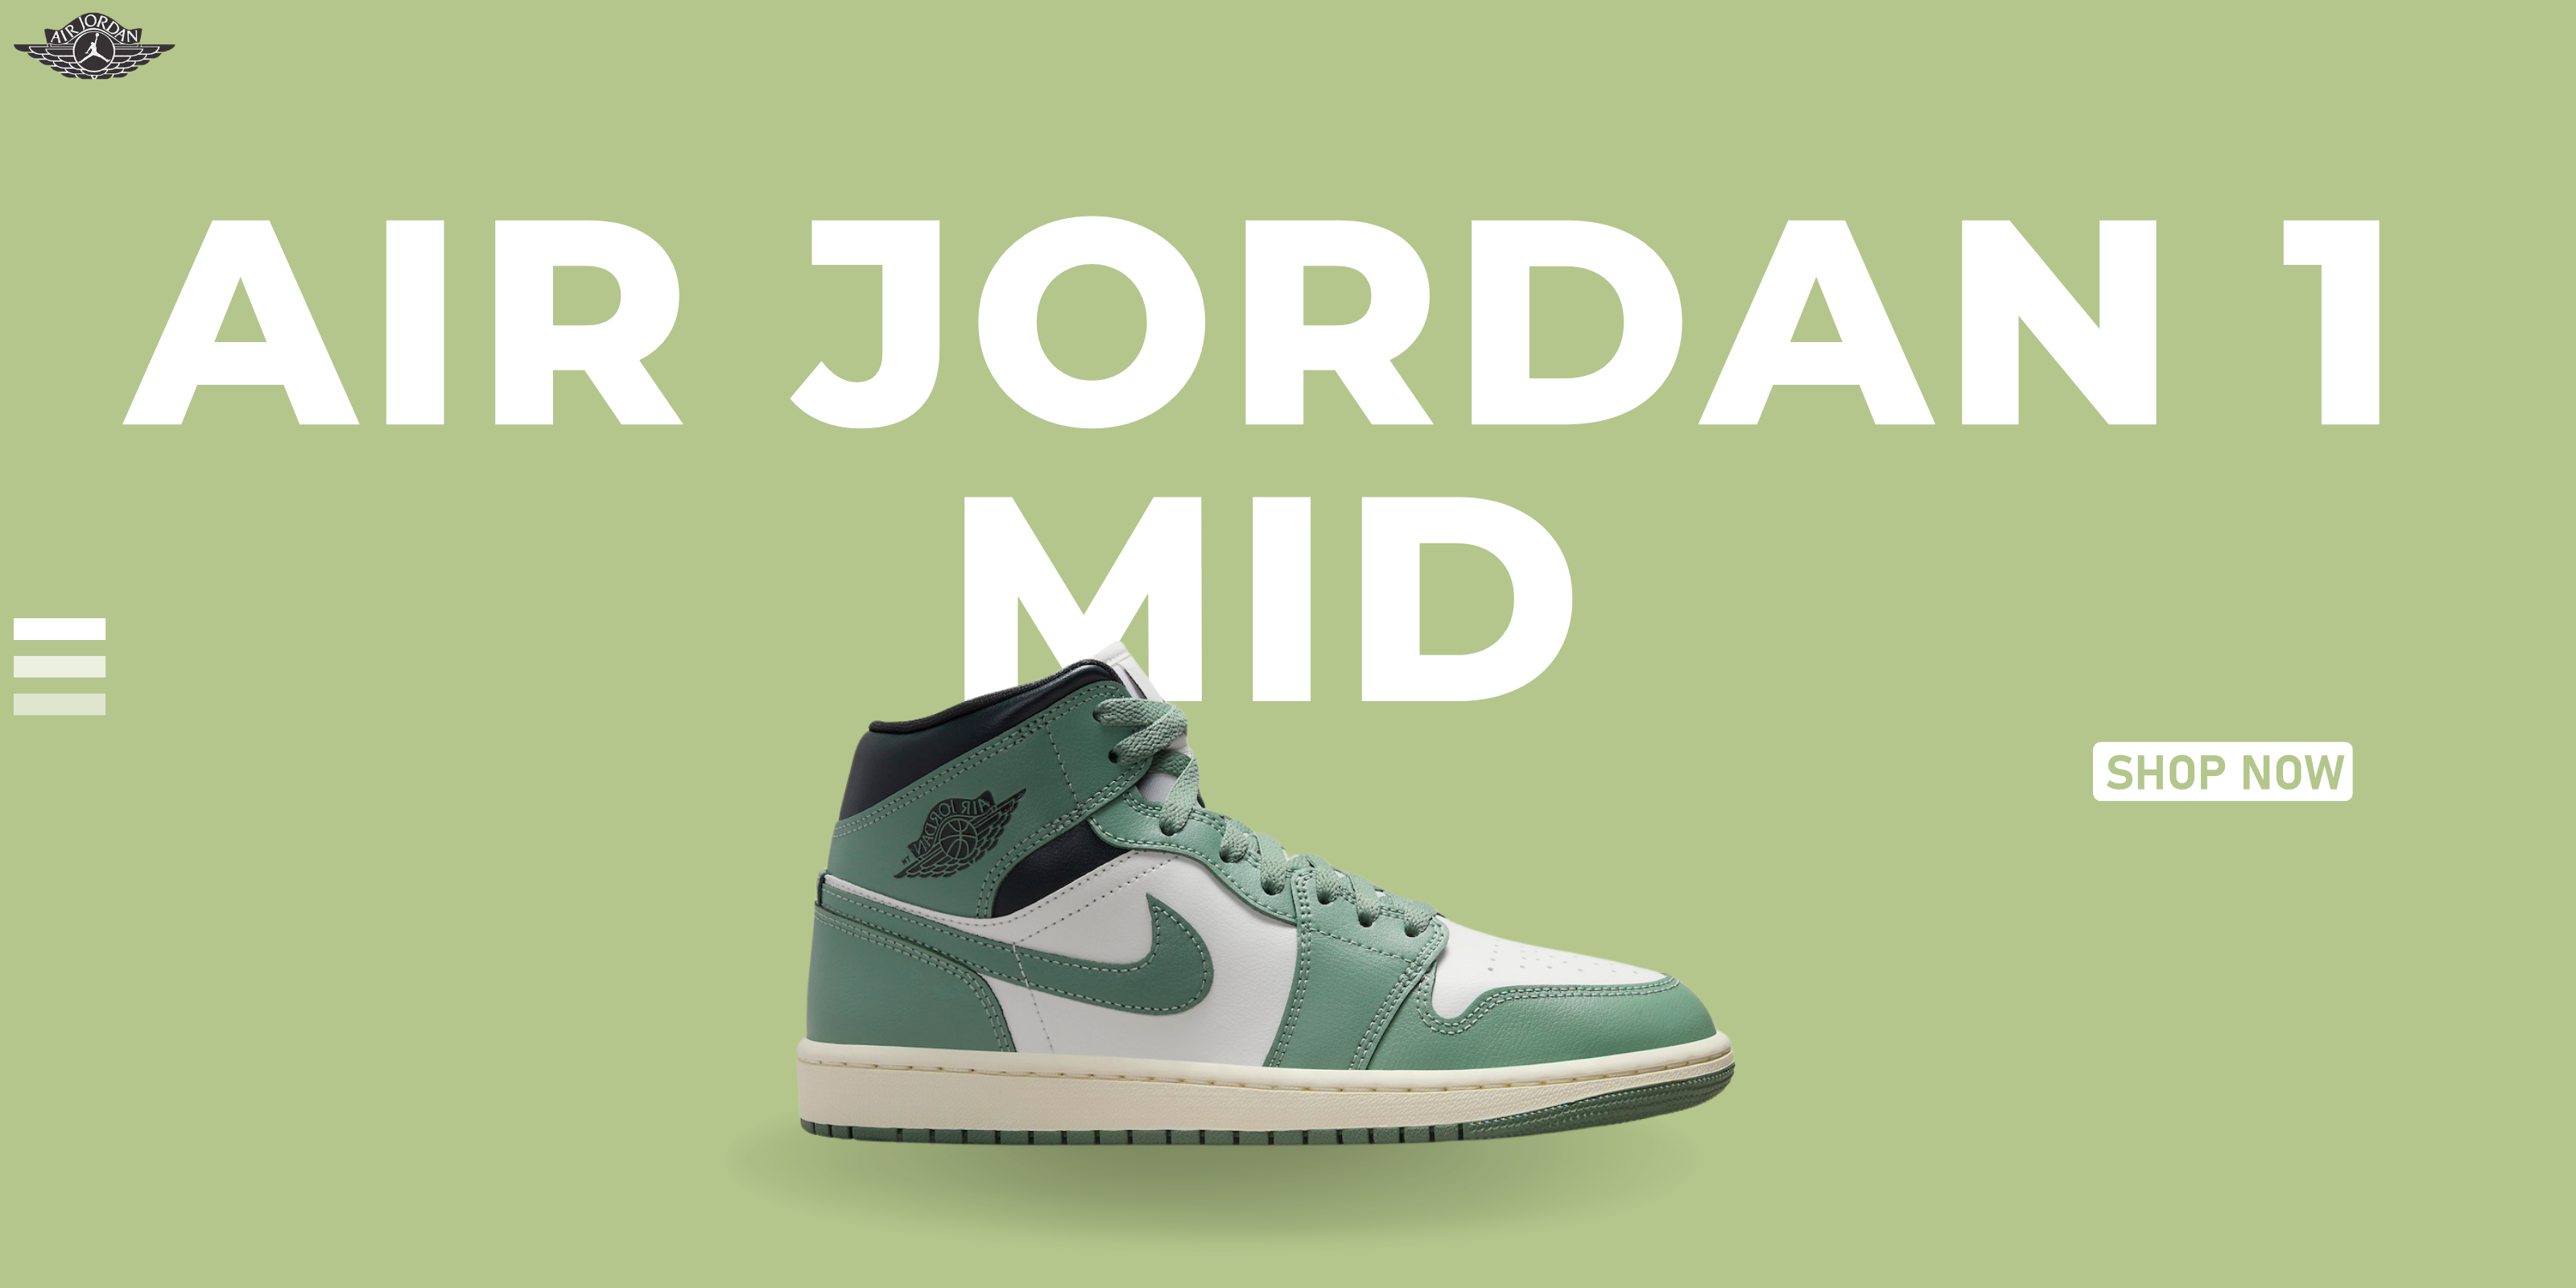 Jordan Mids